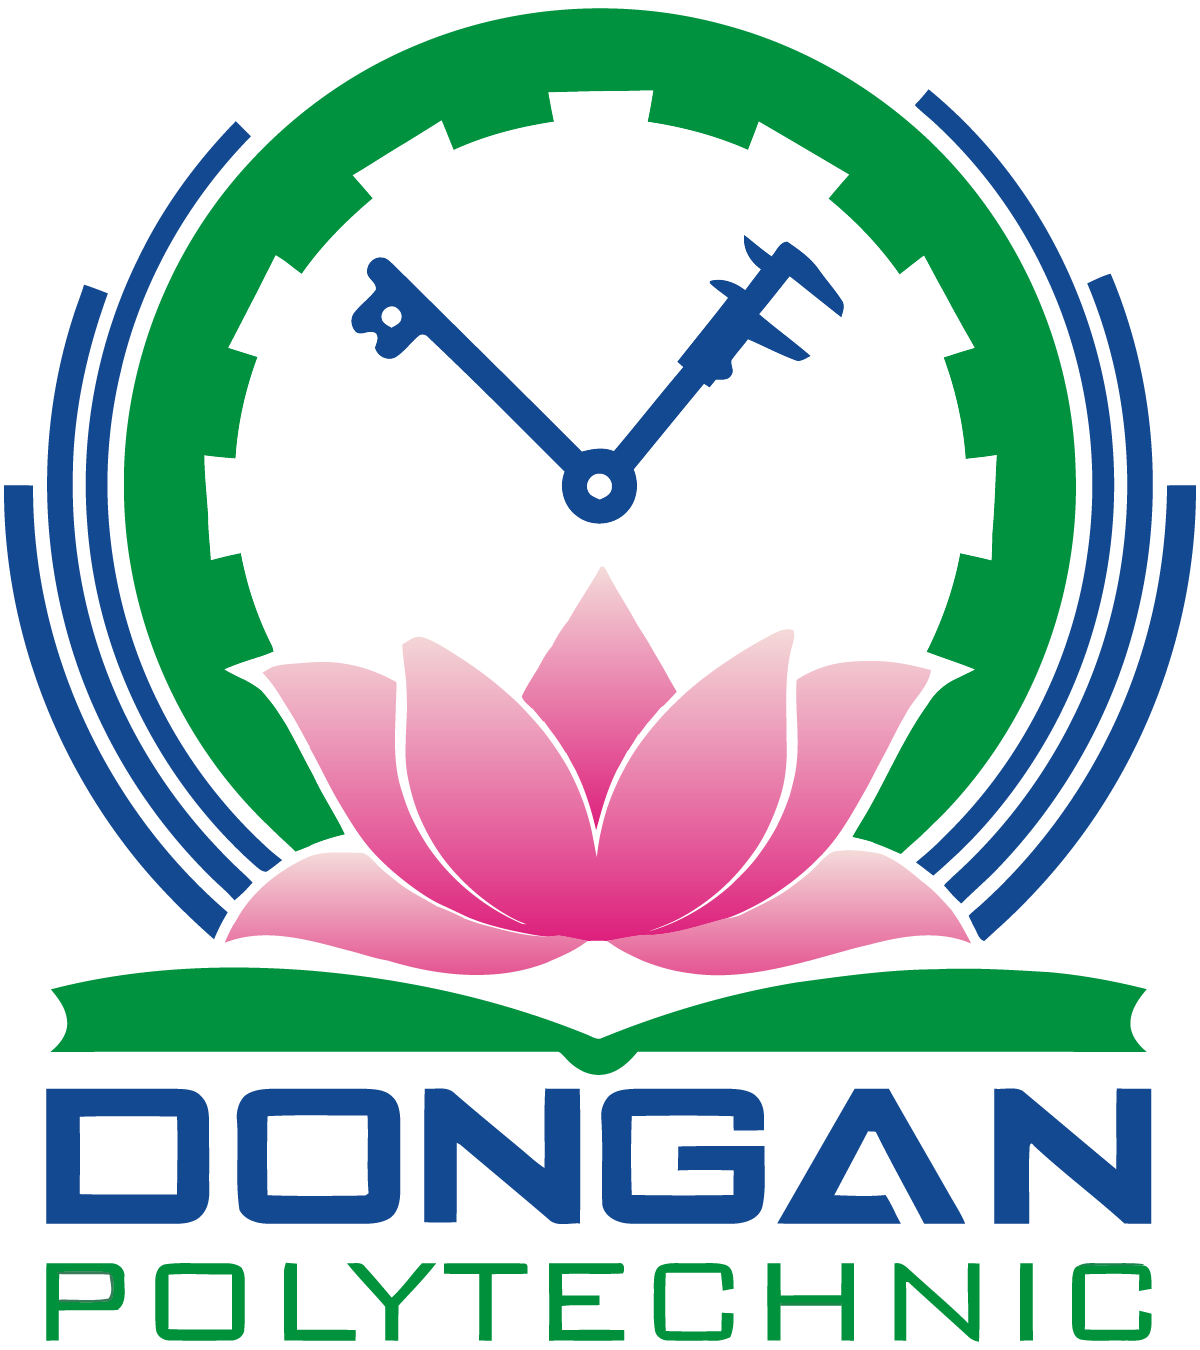 Logo Truong Cao dang nghe Cong nghe cao Dong An